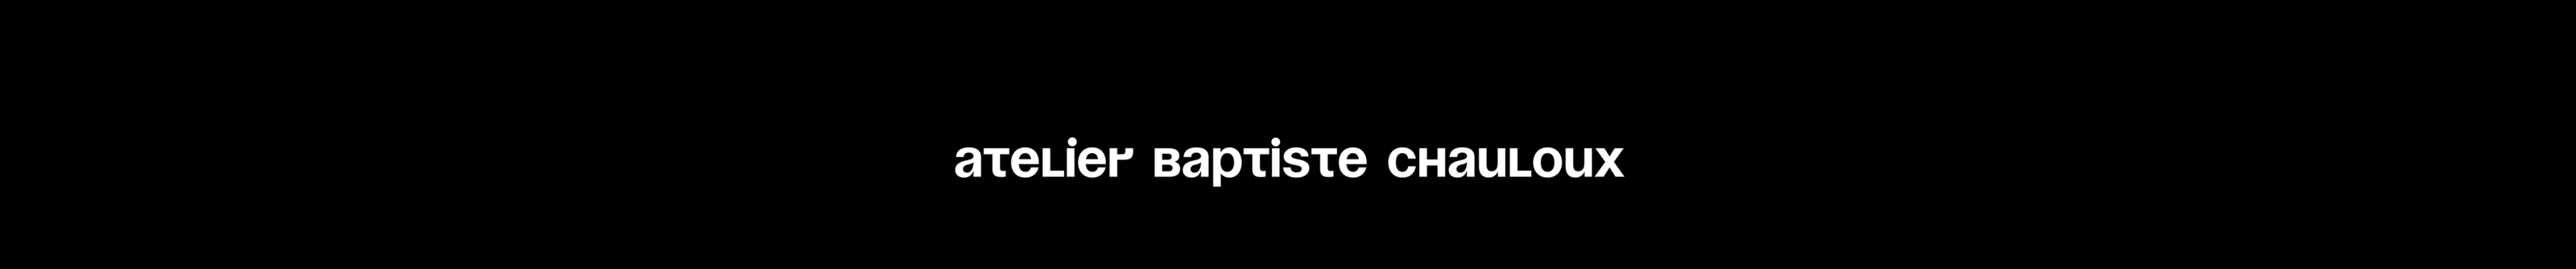 Baptiste Chauloux's profile banner